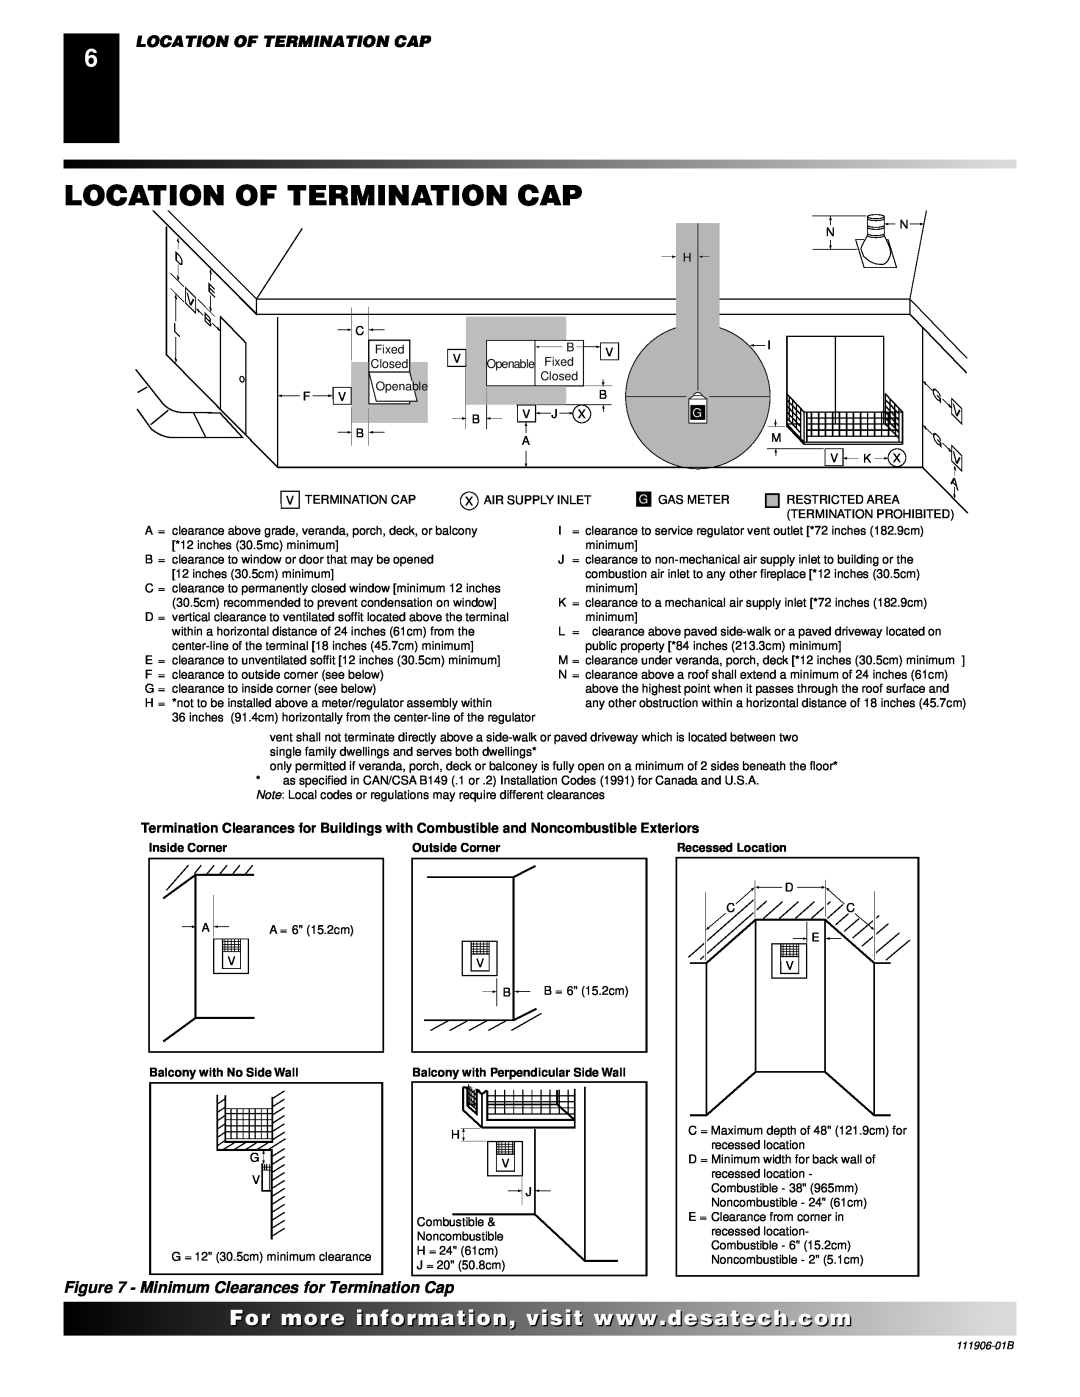 Desa (V)V42PA(1) Location Of Termination Cap, D E B L, V G V A, Minimum Clearances for Termination Cap, Inside Corner 